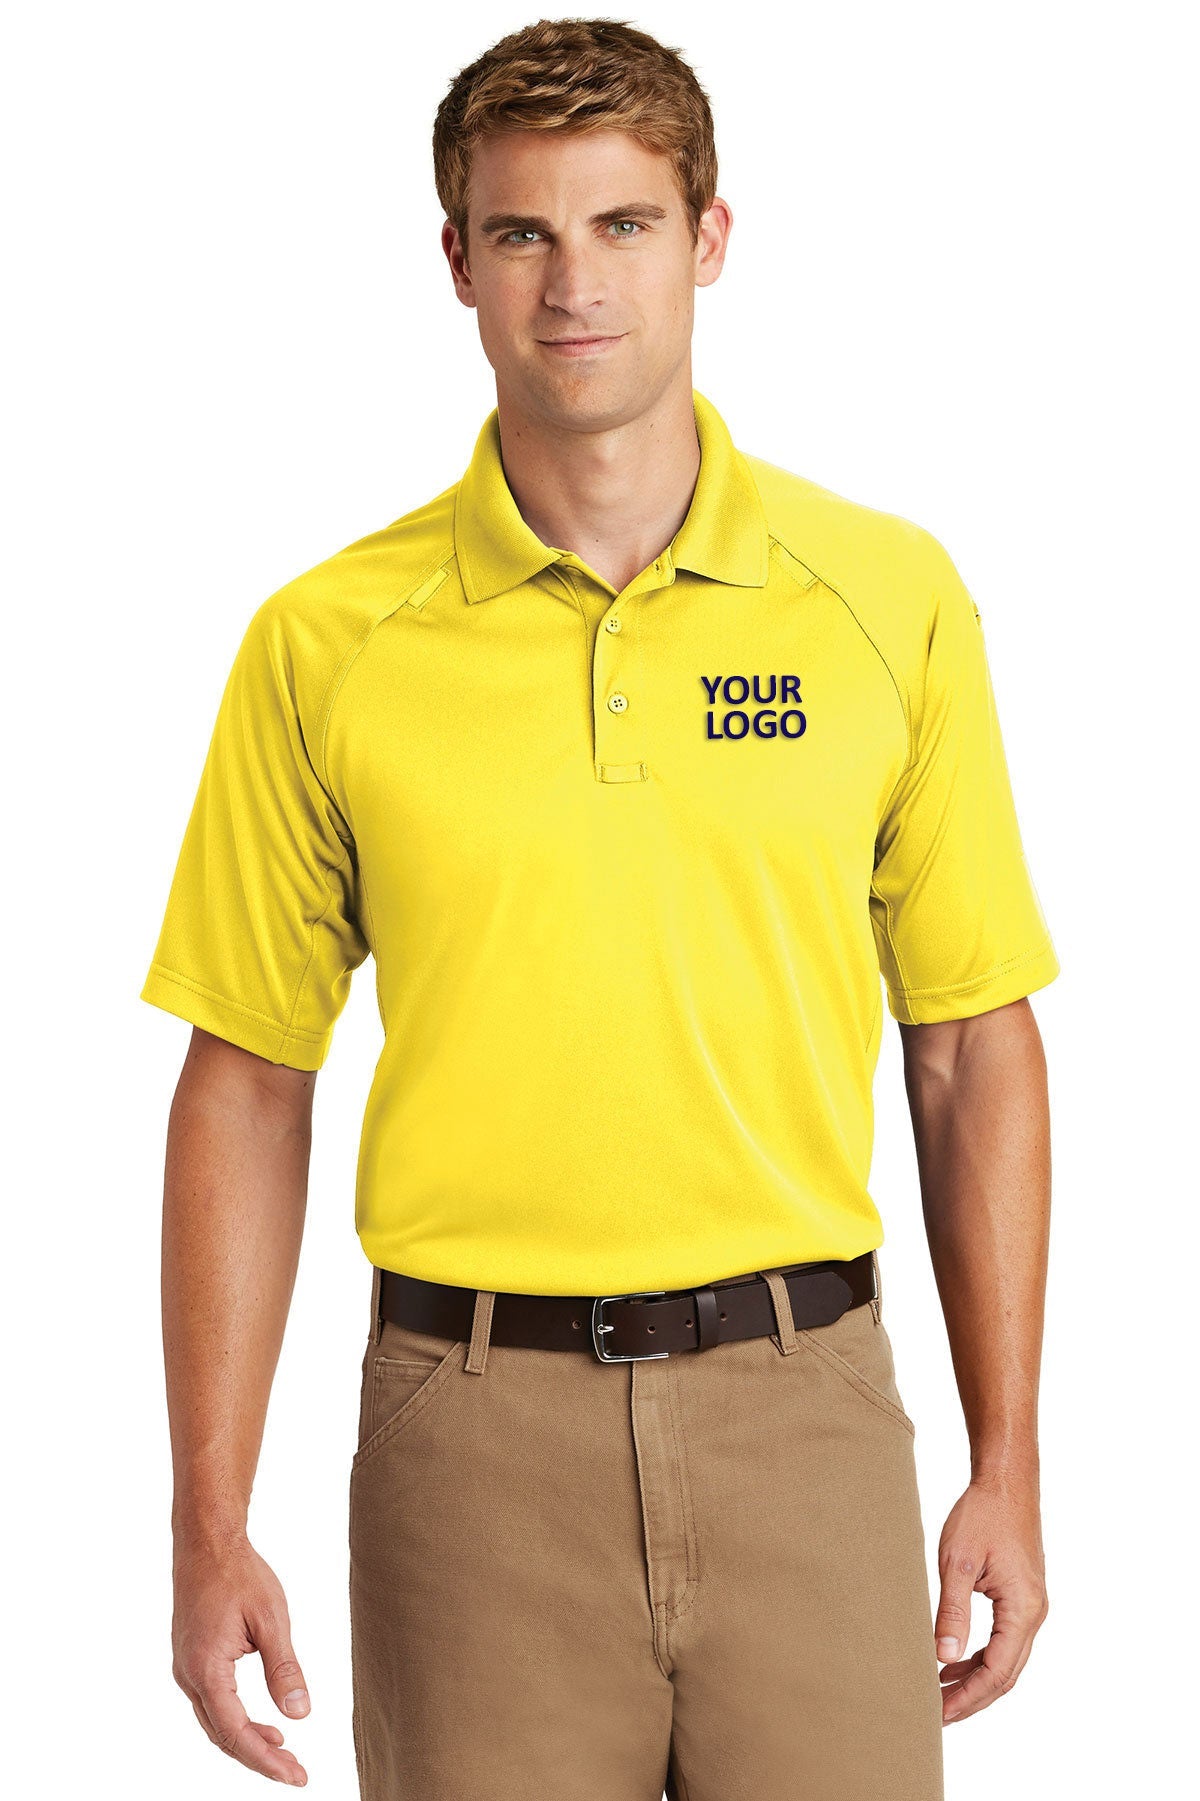 CornerStone Yellow CS410 polo shirts with custom logos